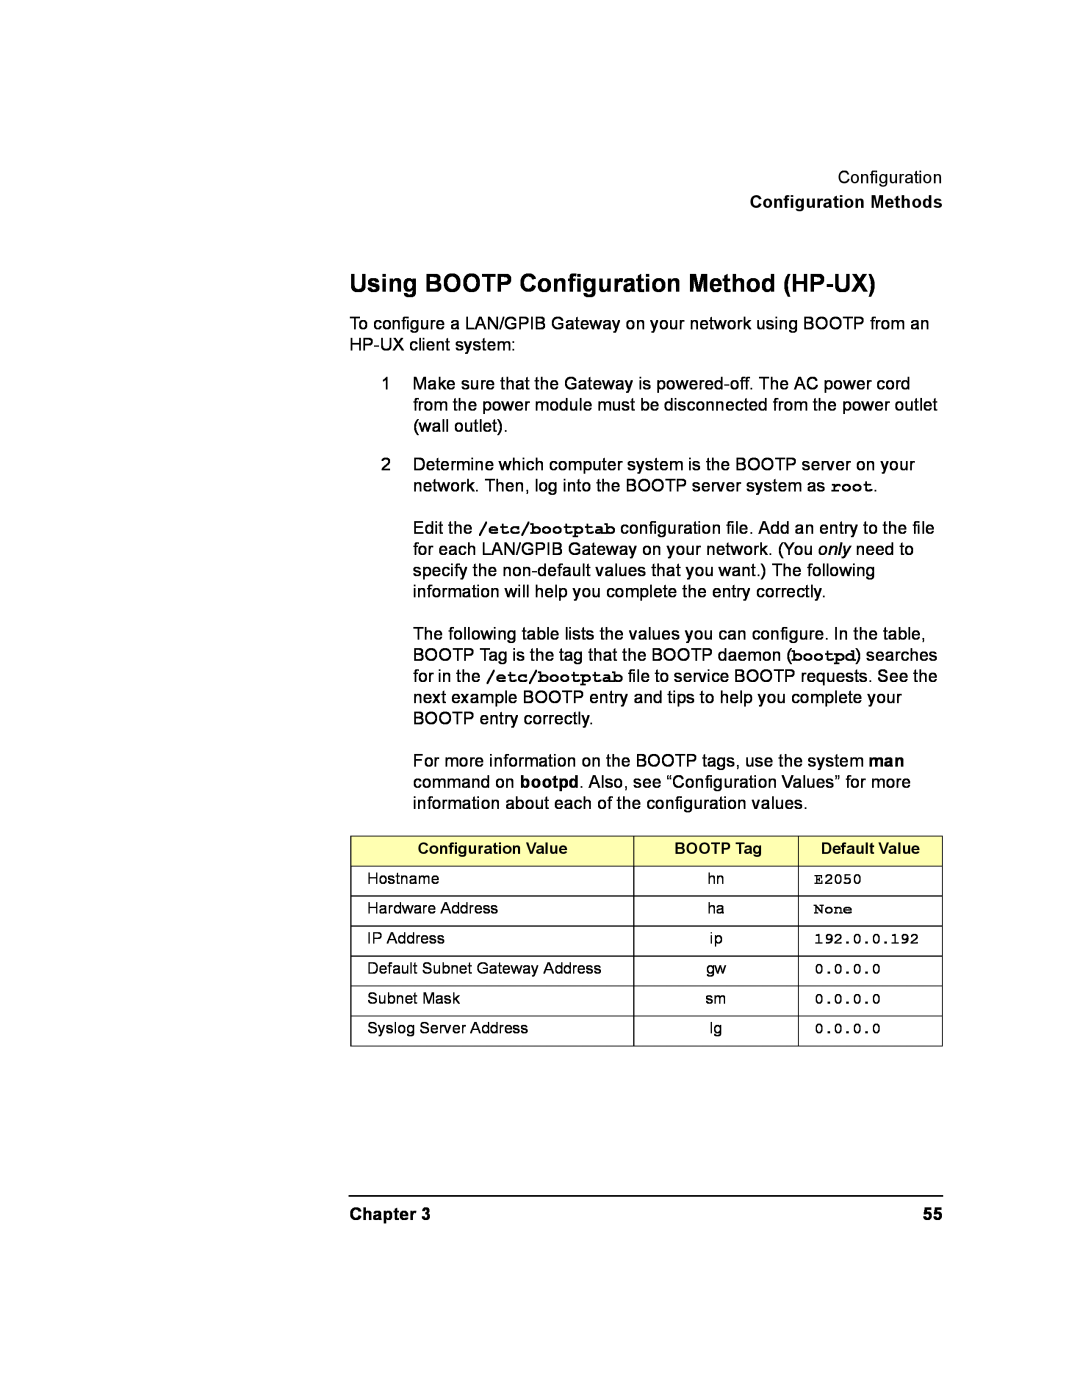 Agilent Technologies E2050-90003 manual Using BOOTP Configuration Method HP-UX, Configuration Methods, Chapter 